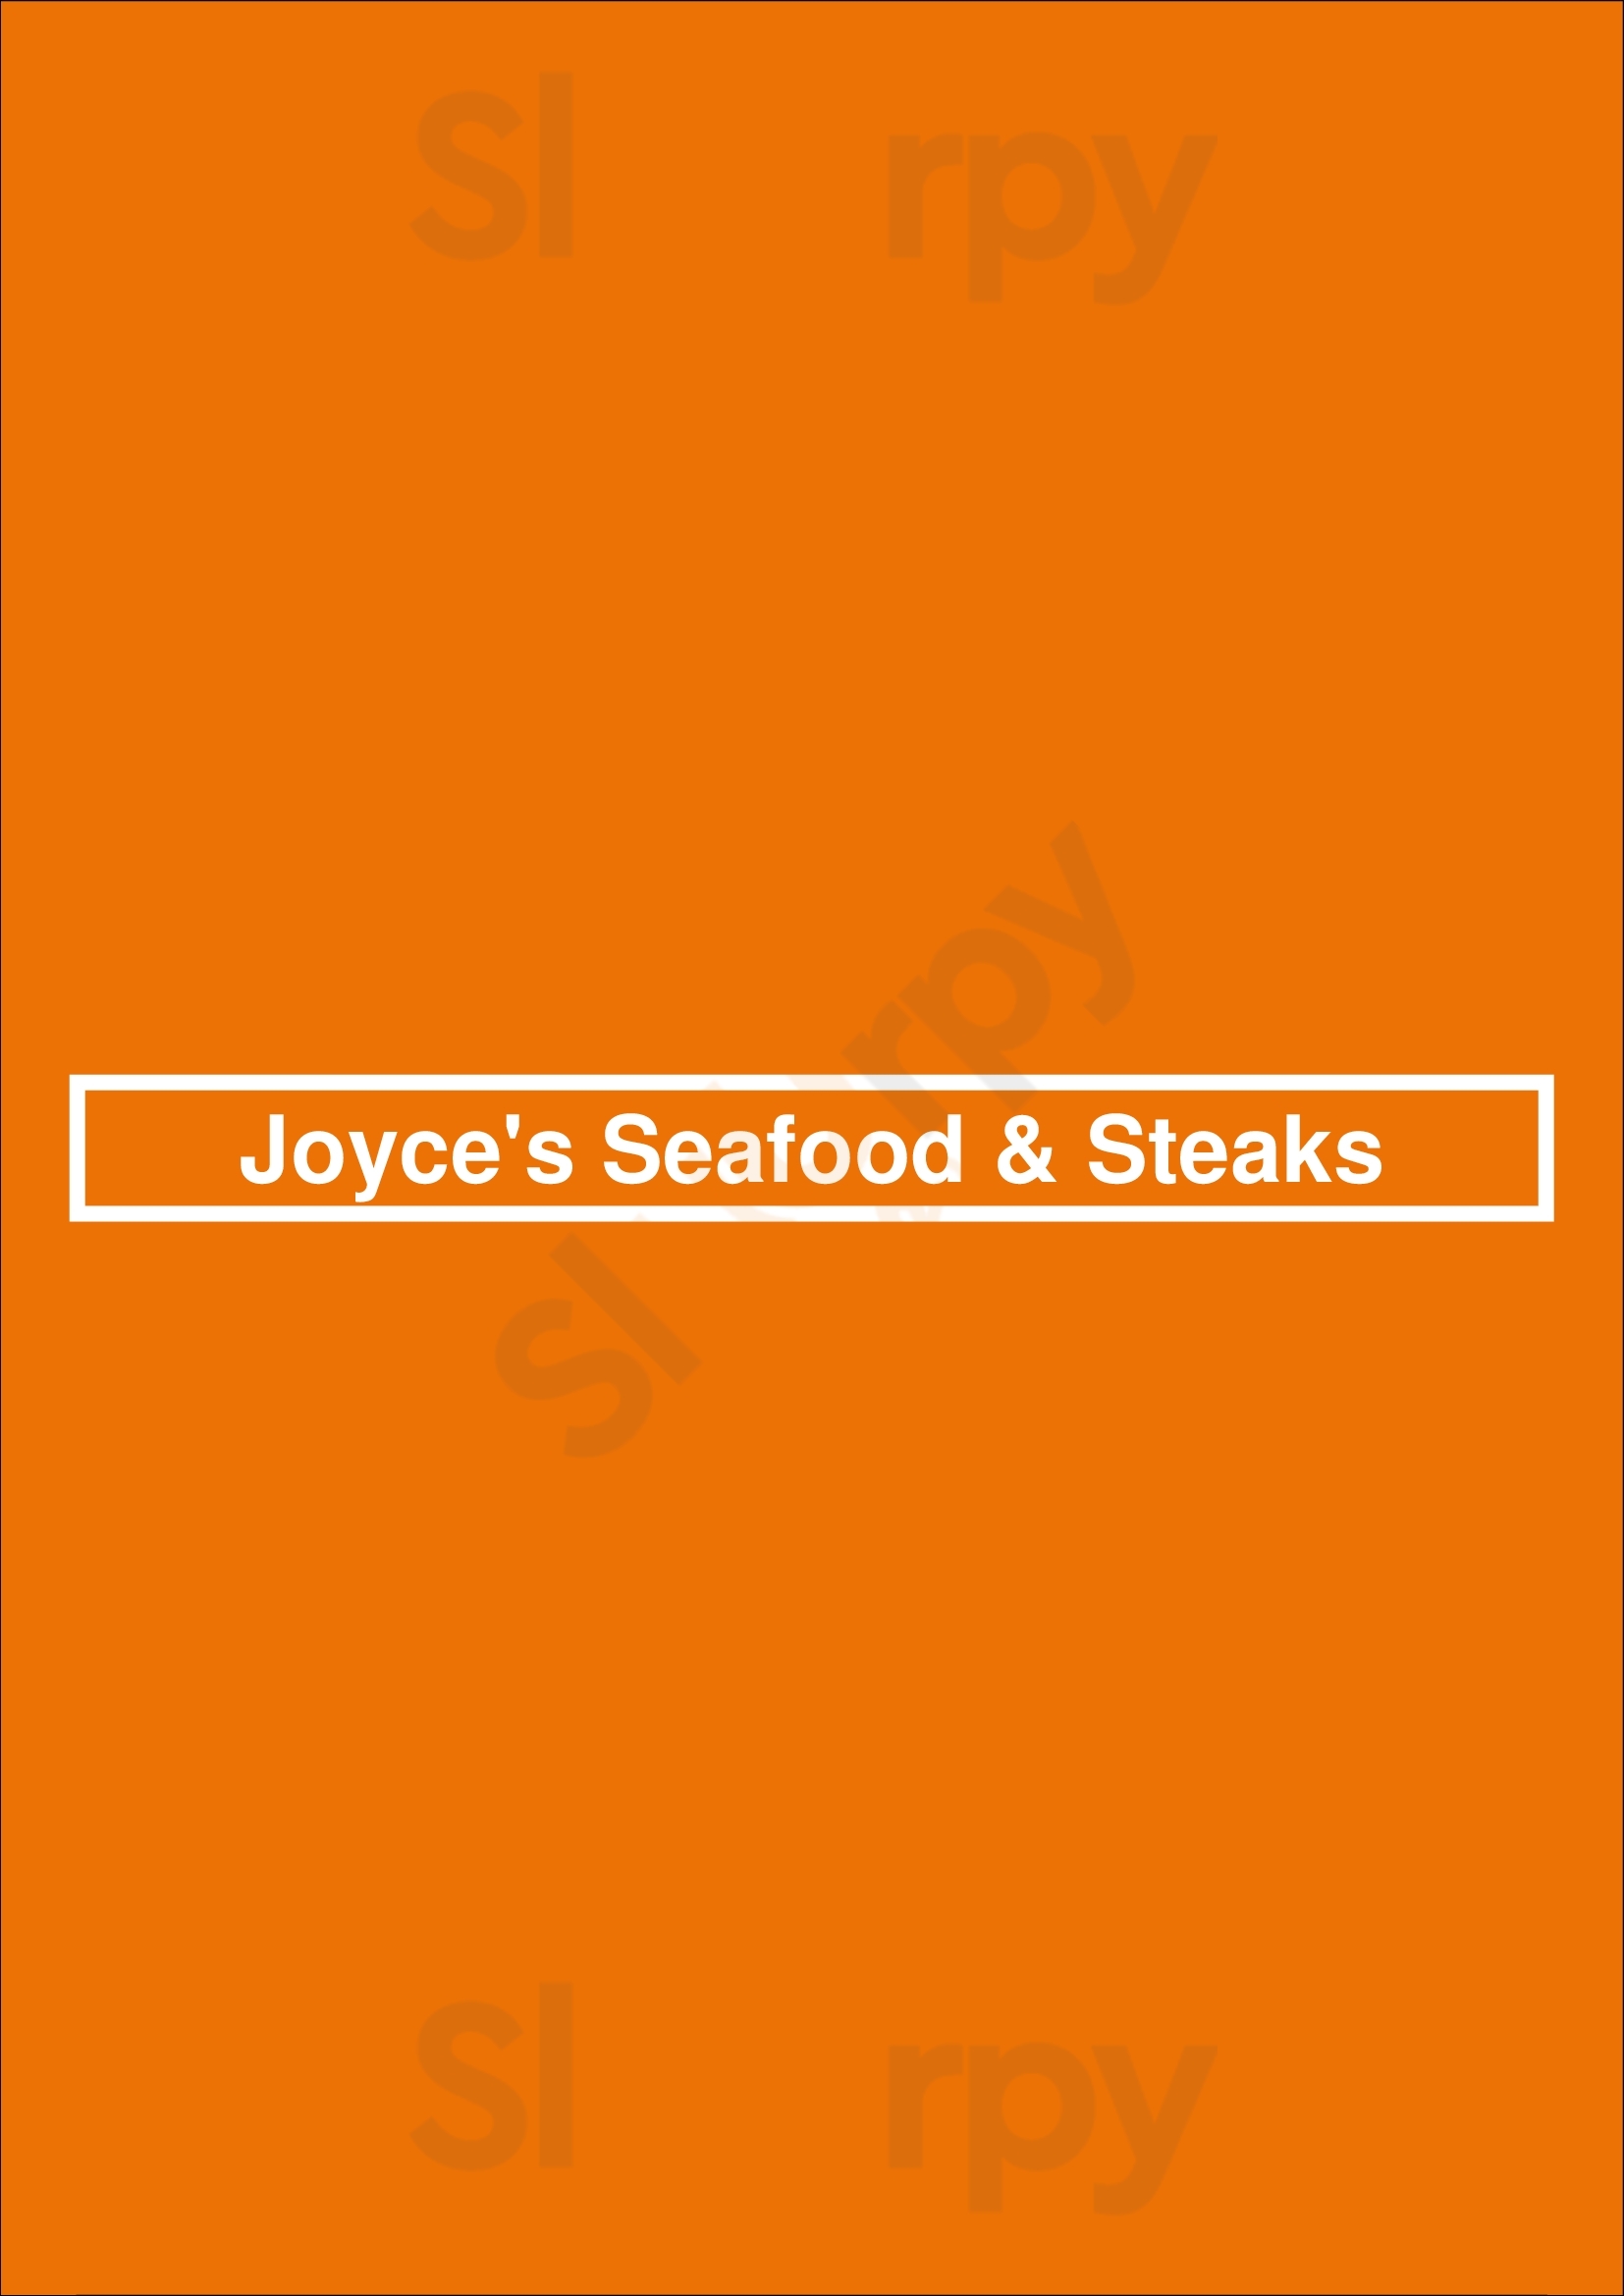 Joyce's Seafood & Steaks Houston Menu - 1